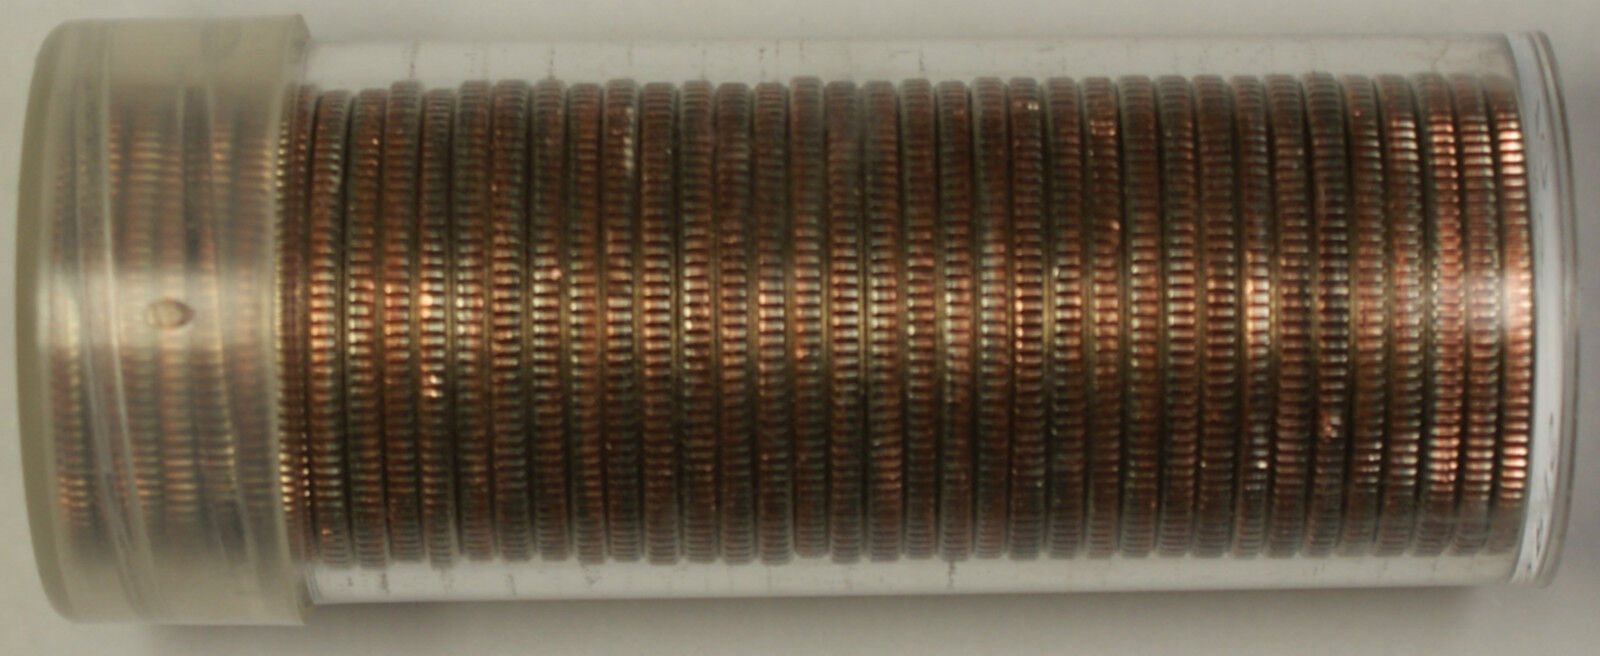 2002-P Mississippi Statehood Quarter Roll- 40 BU Coins in OBW/Tube